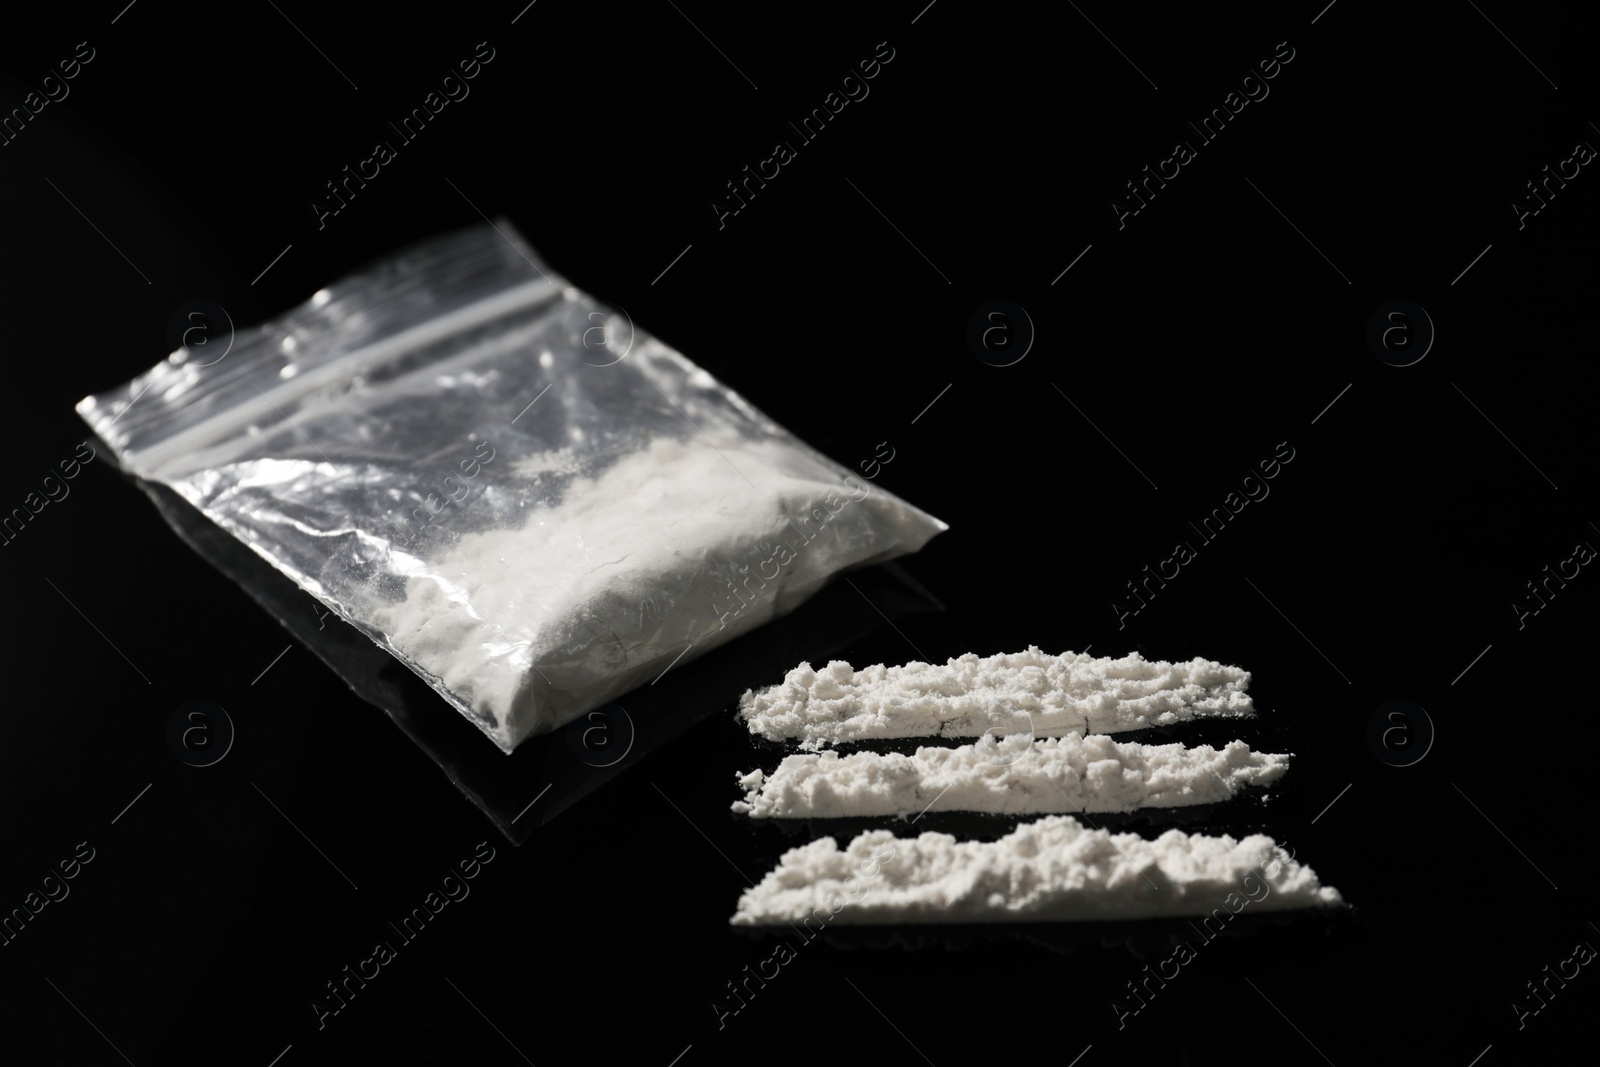 Photo of Drug addiction. Plastic bag with cocaine on black table